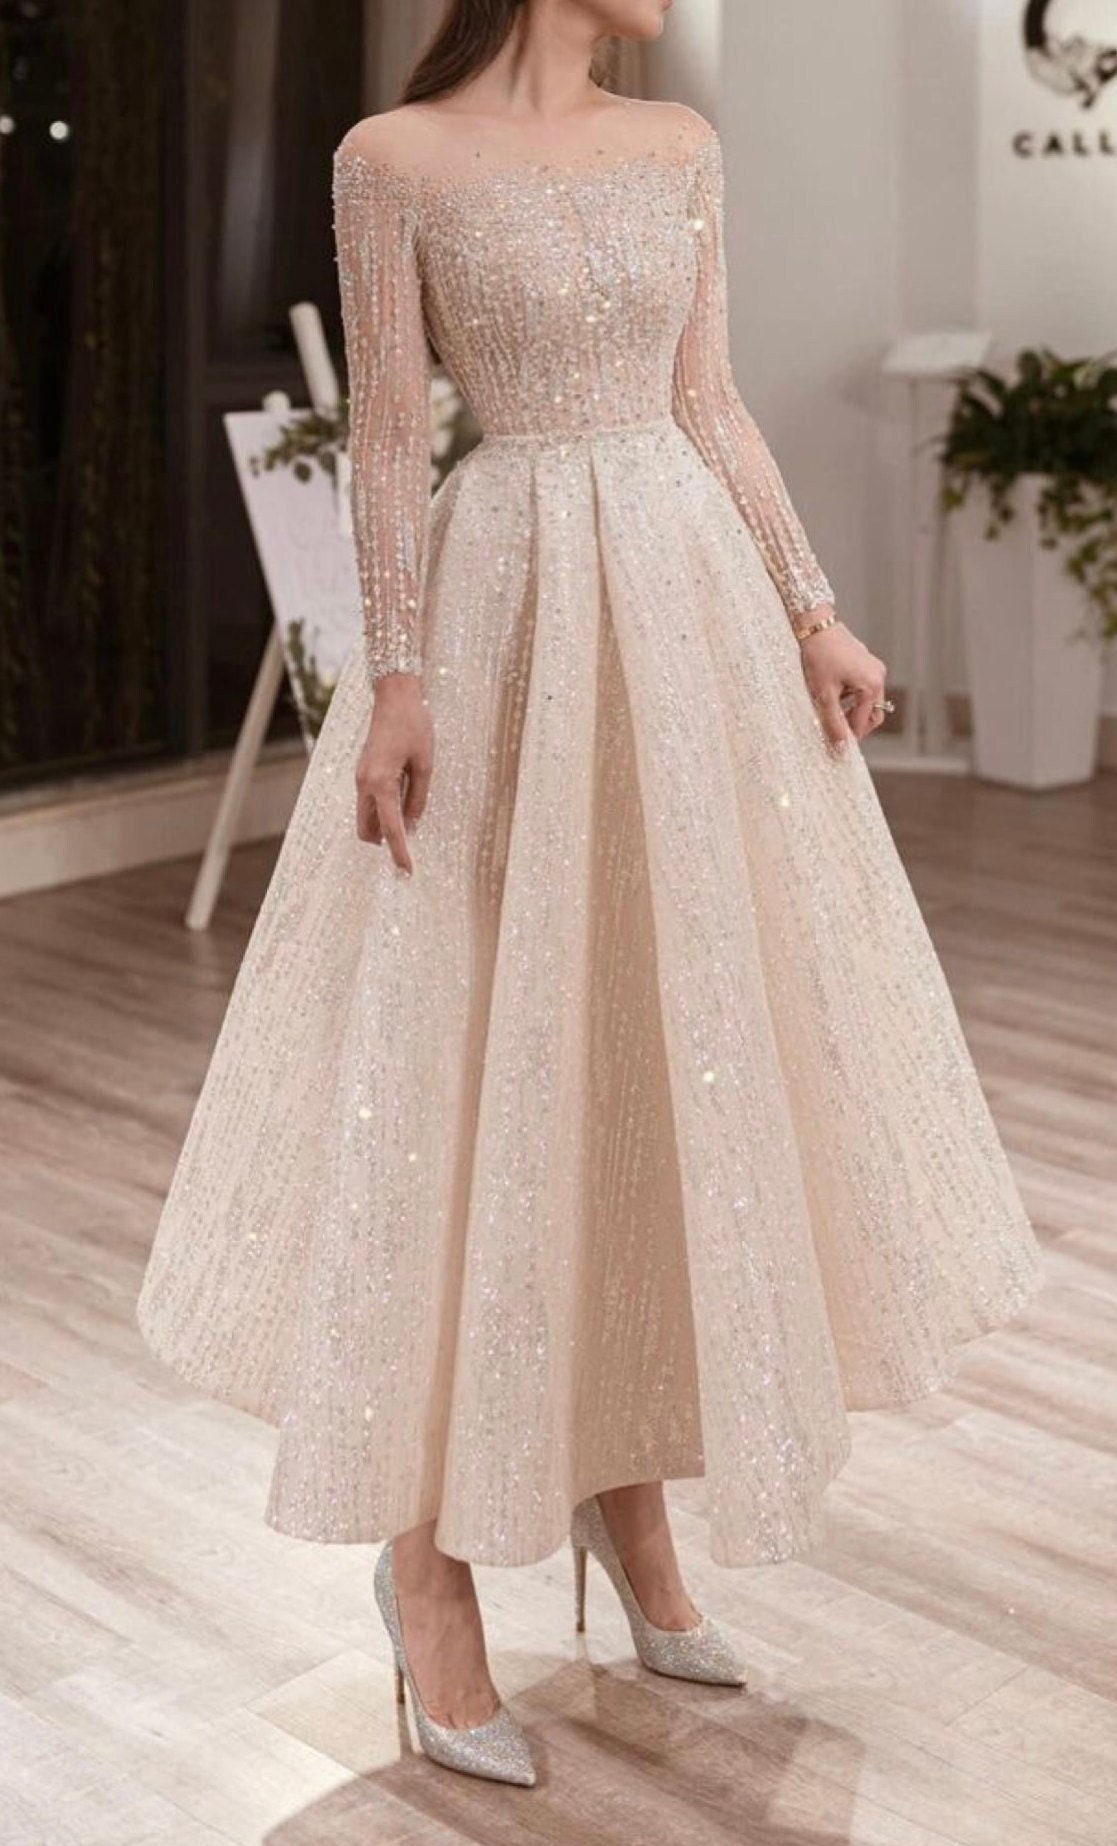 AYESHA Dubai Wedding Dress Gown Full Length Prom Party Dress